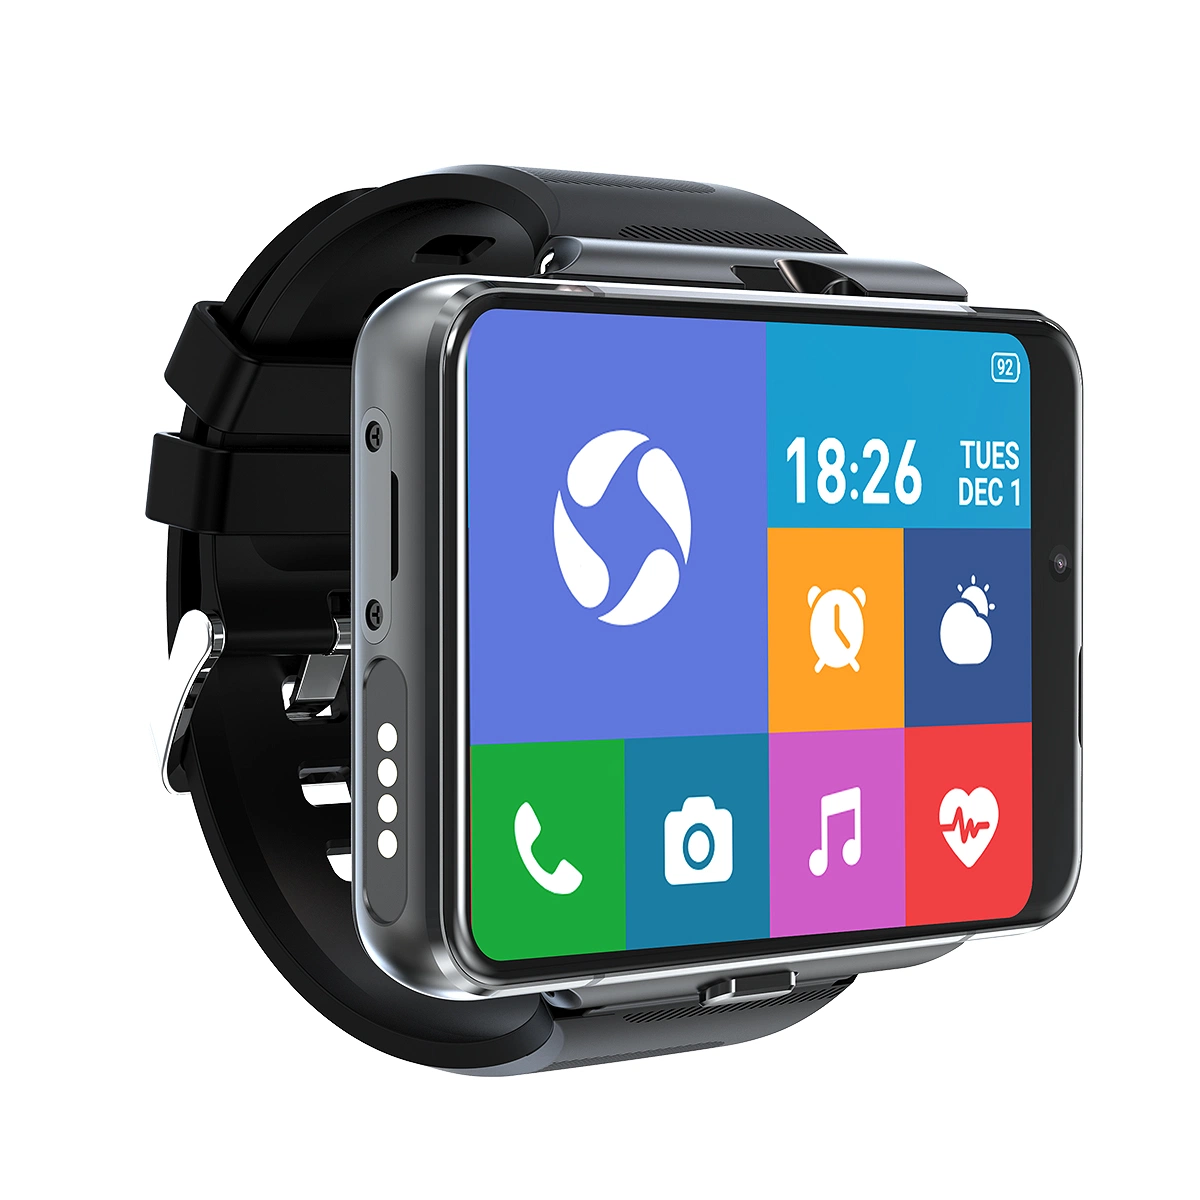 OEM Custom Wholesale Luxury Brands Fitness Straps 4G Smart Watch Phone Wrist Digital Mechanical Band Sport Android Smart Watch (s999)